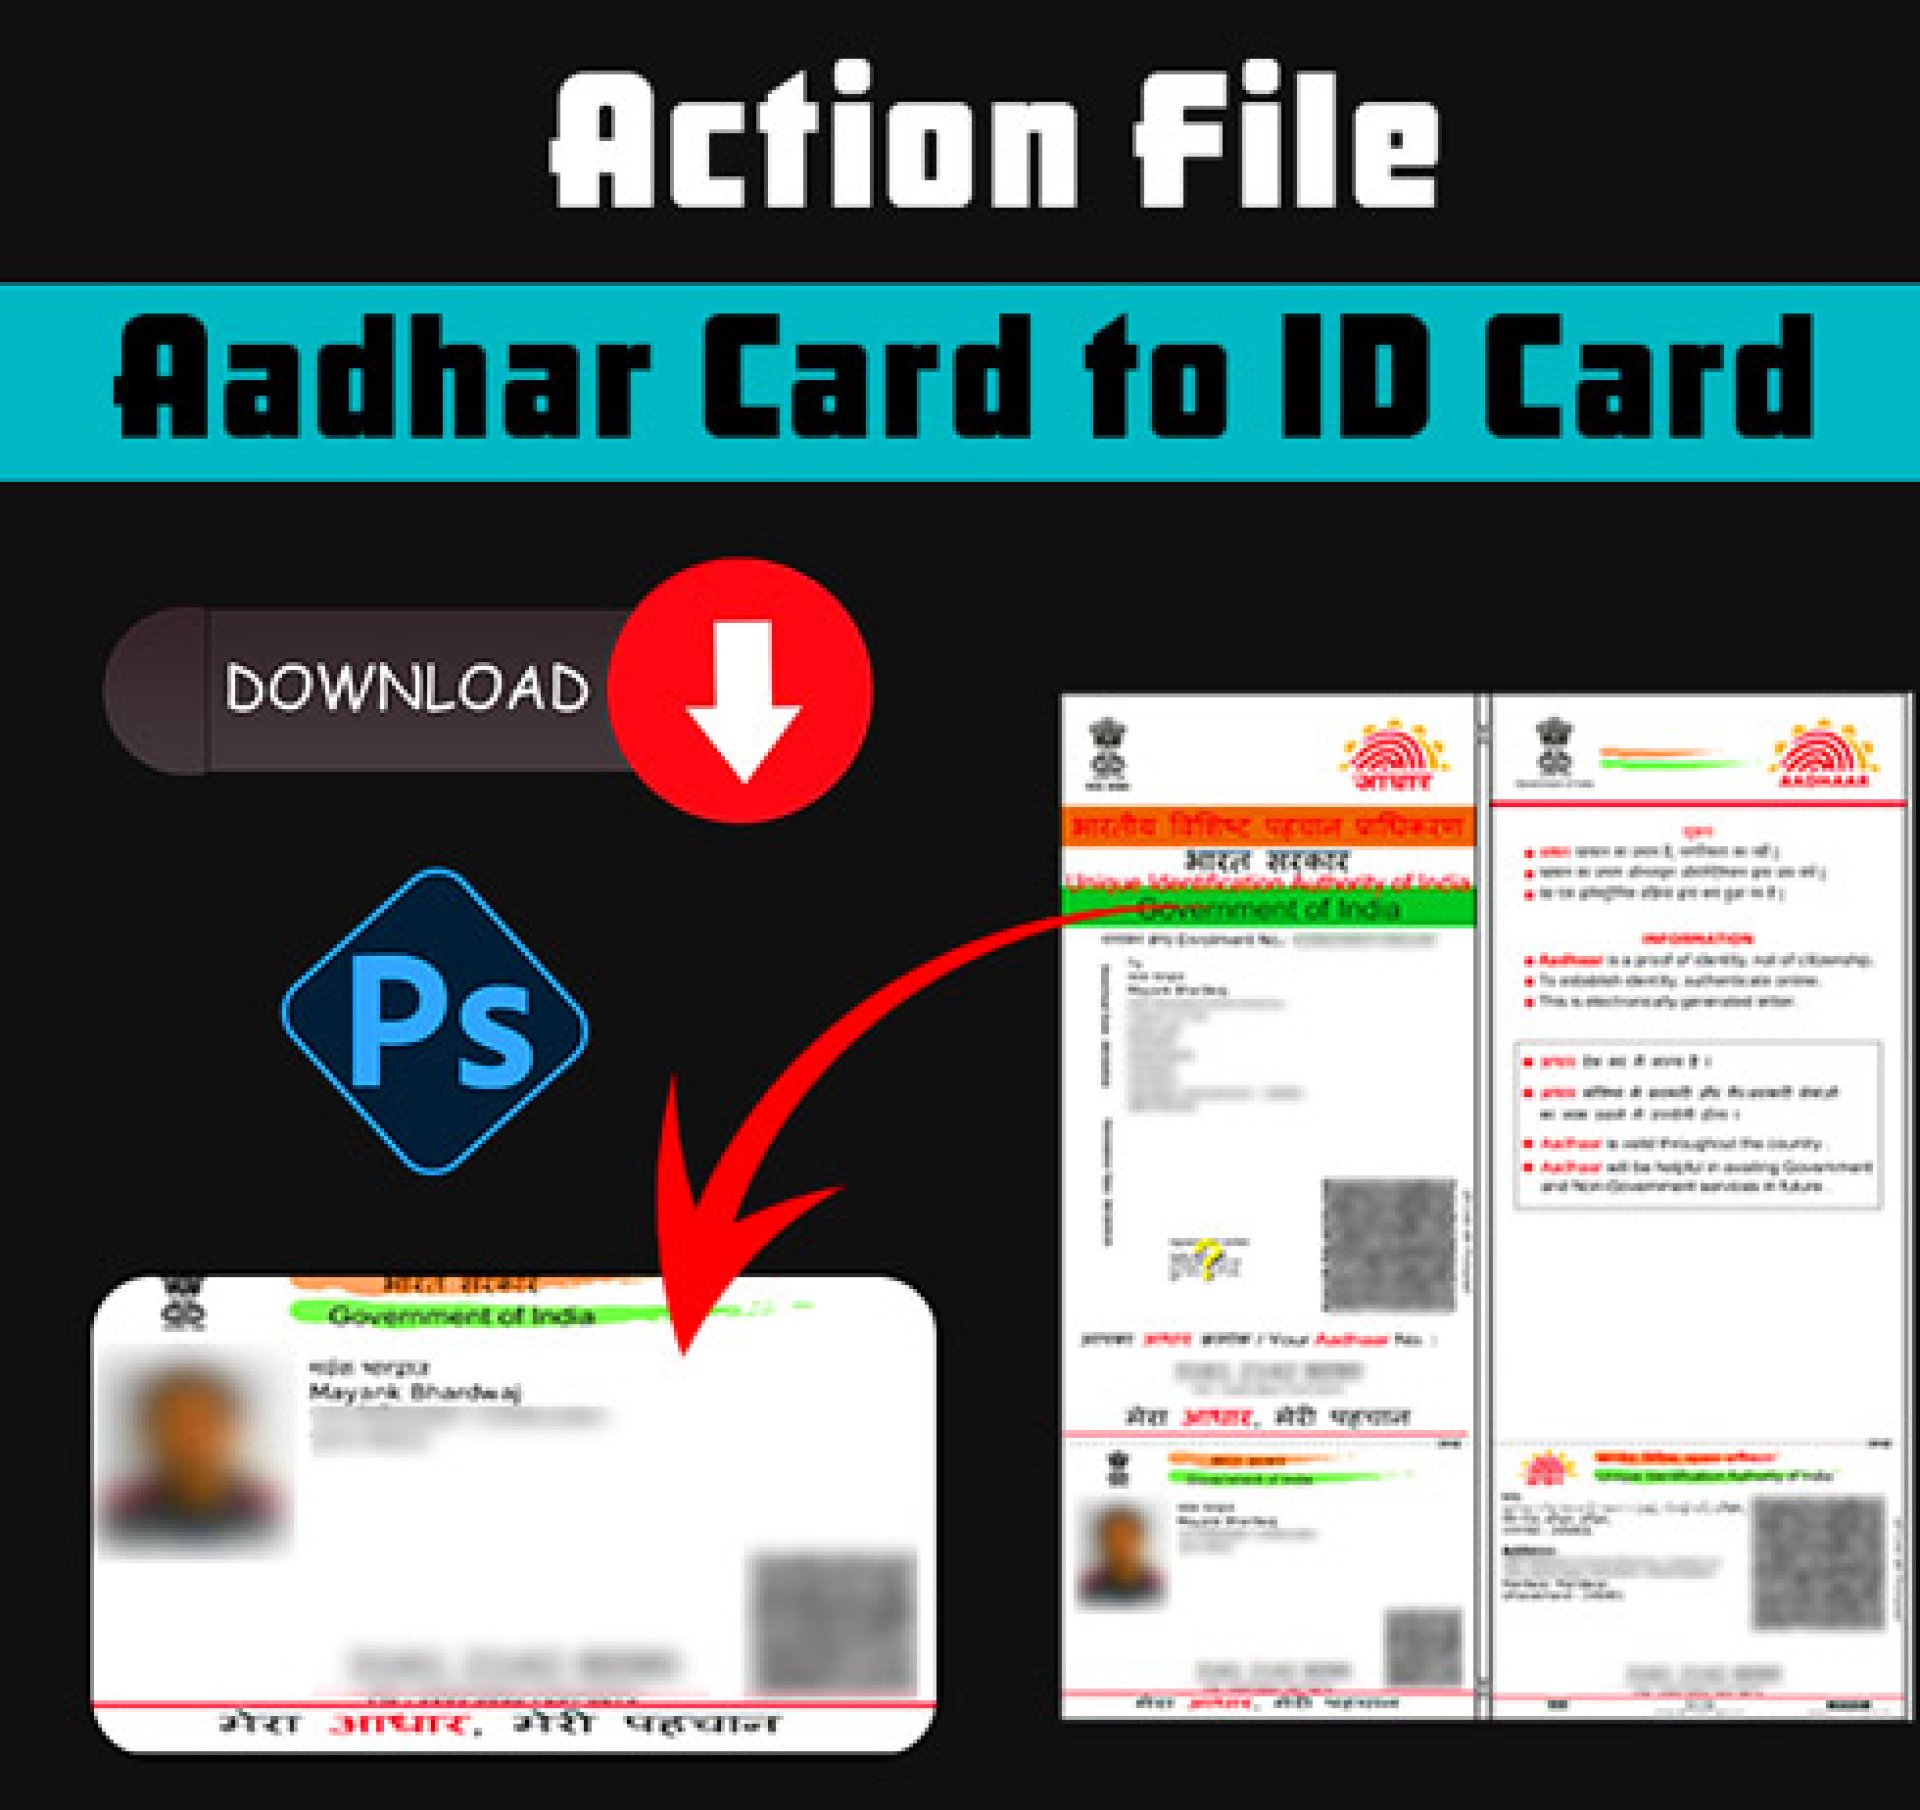 aadhar card photoshop software download